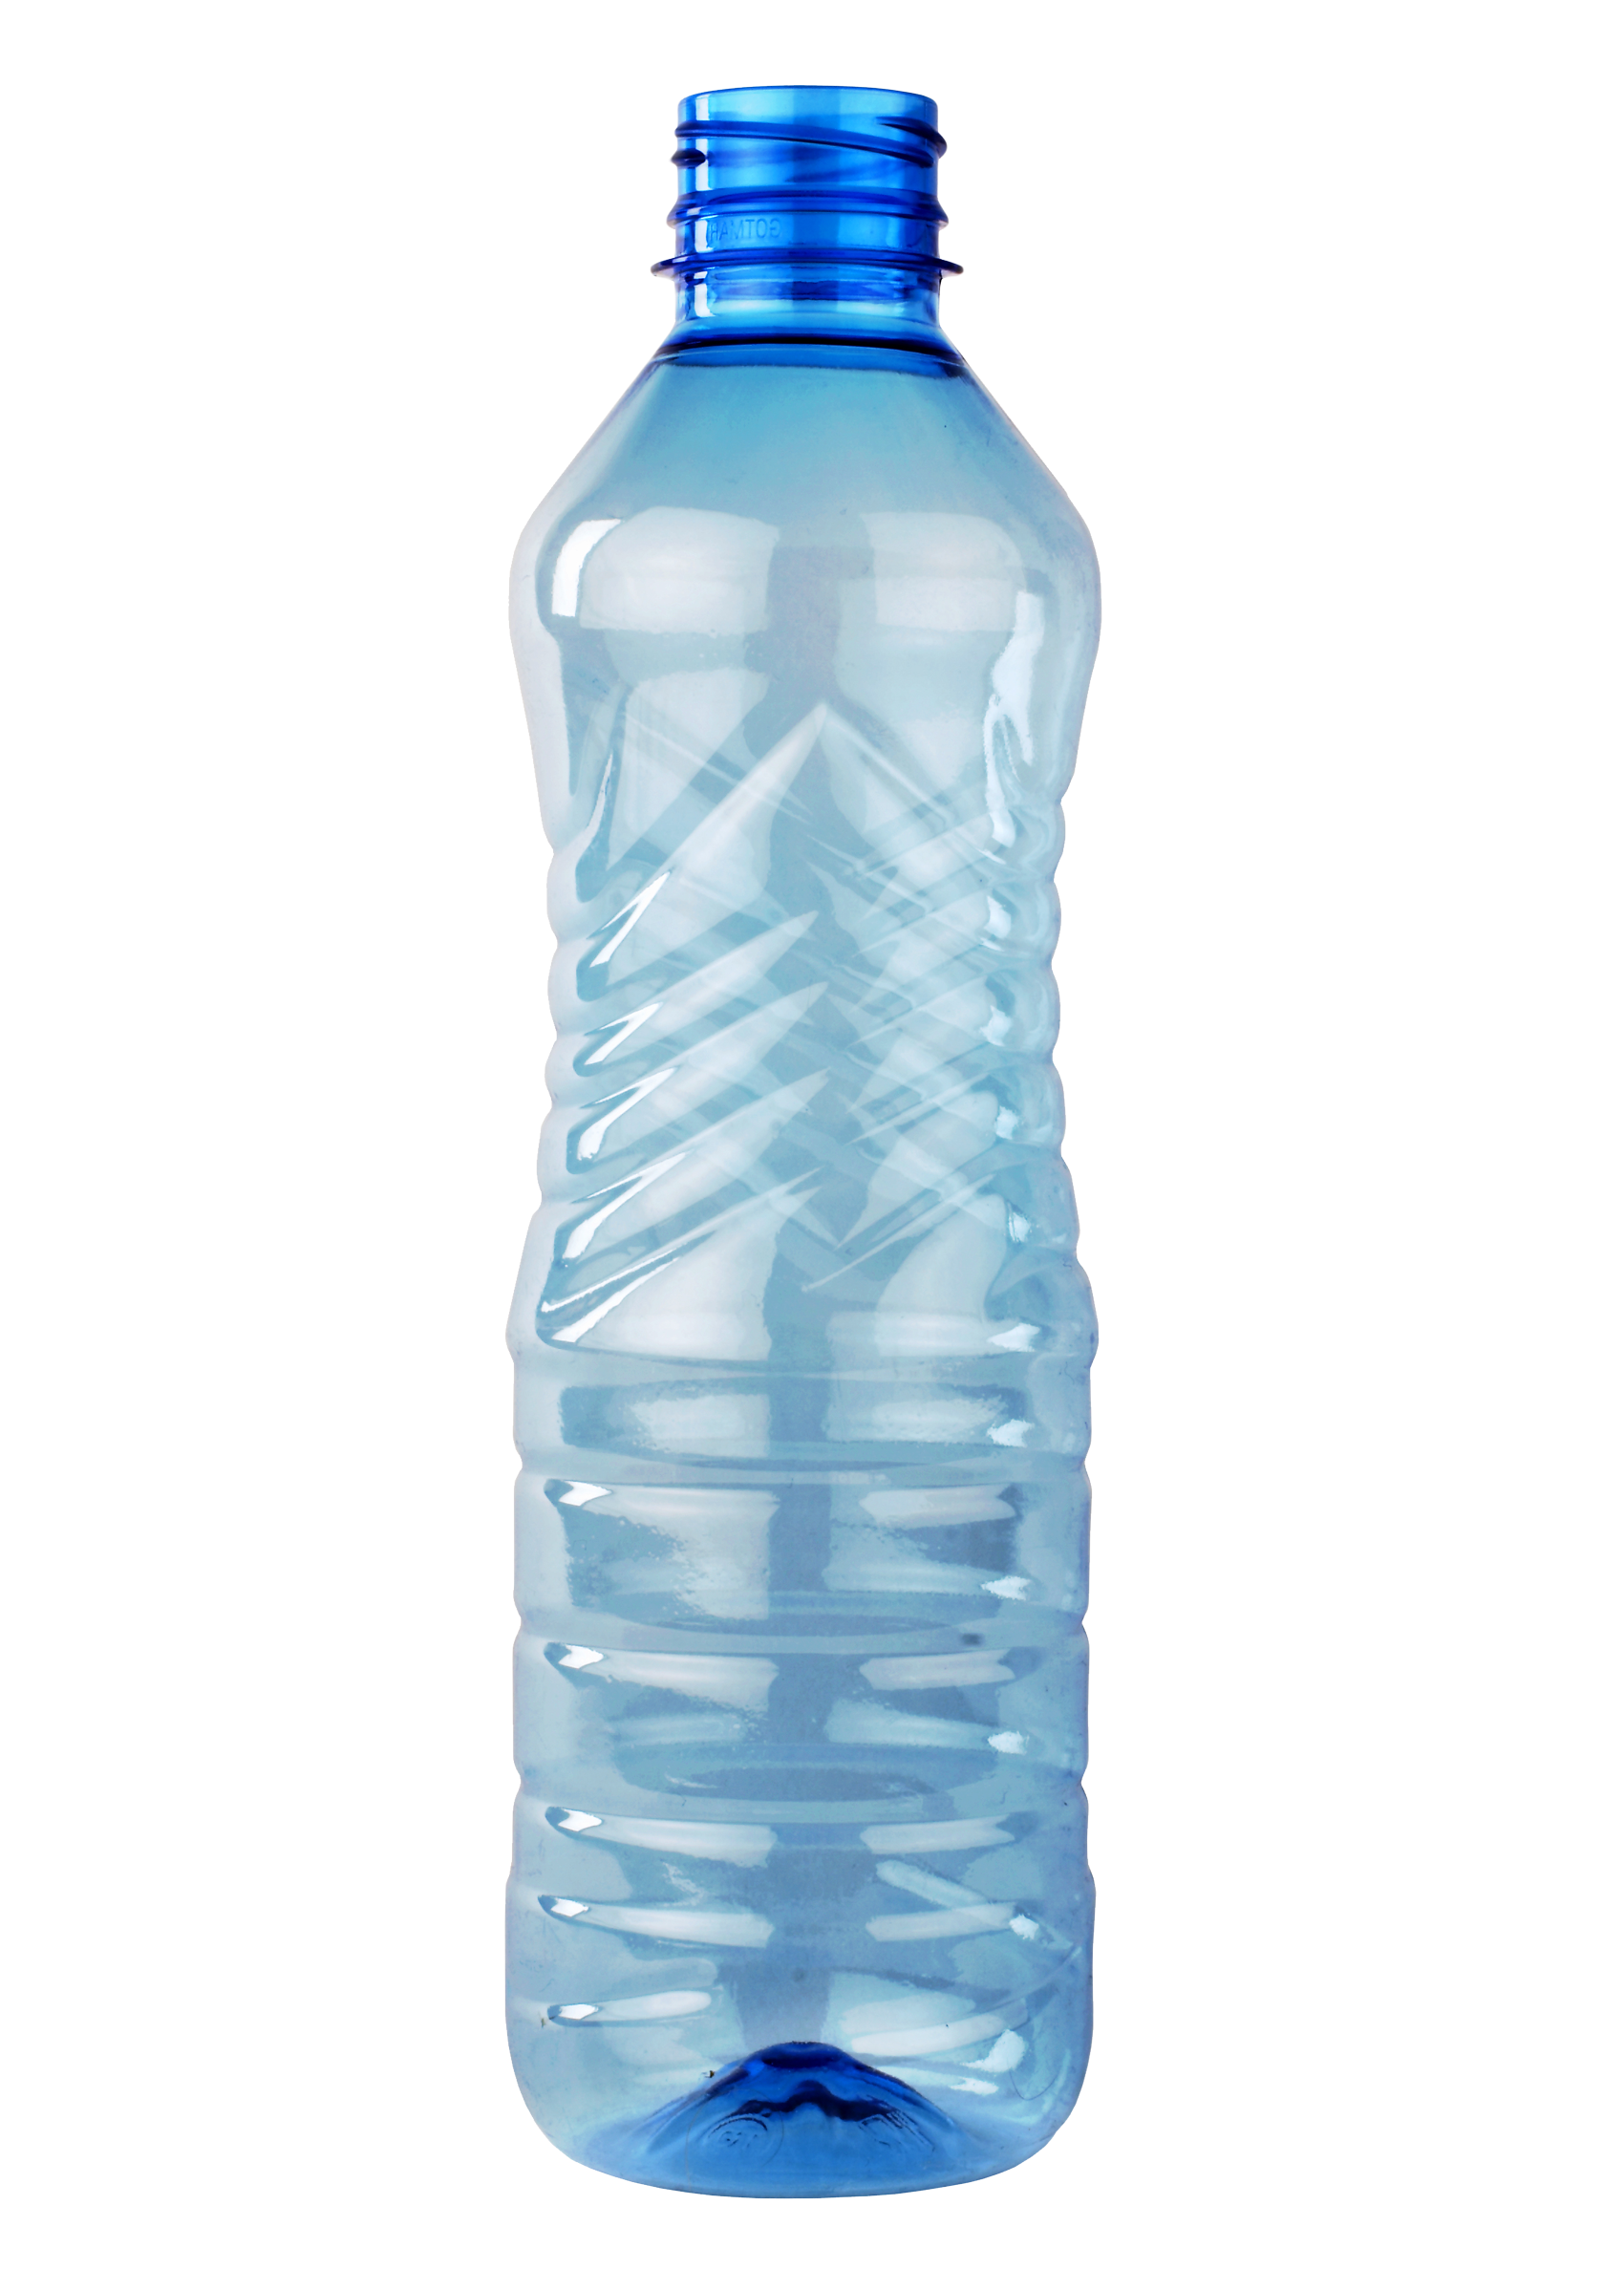 Transparent Botella de agua PNG imagen transparente